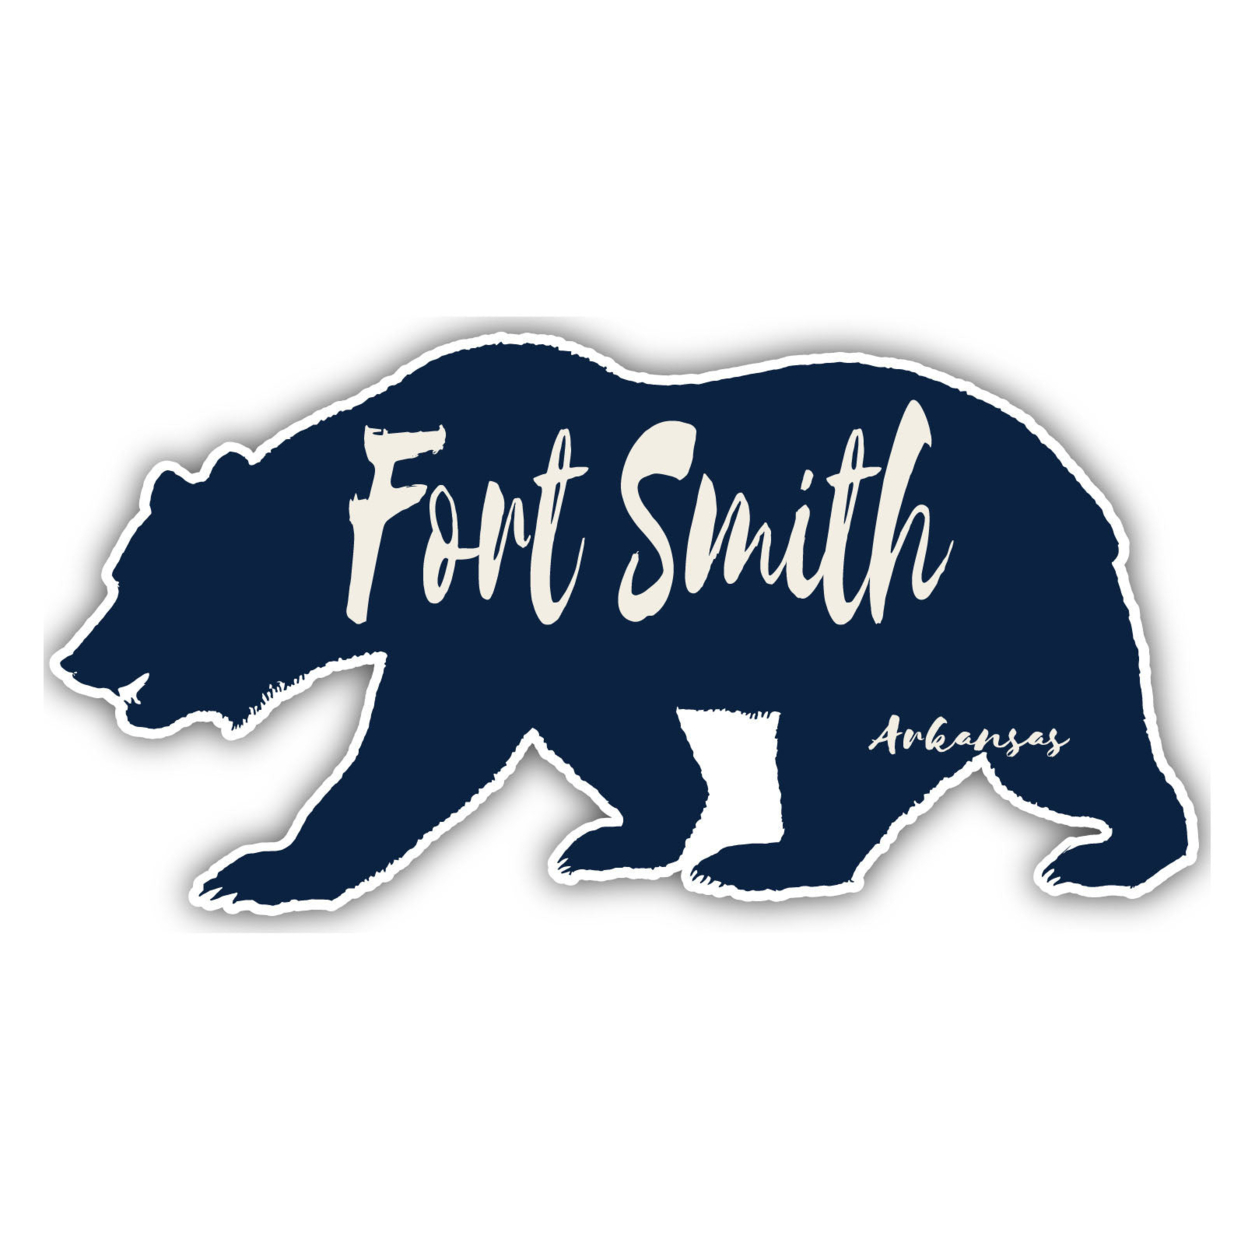 Fort Smith Arkansas Souvenir Decorative Stickers (Choose Theme And Size) - Single Unit, 2-Inch, Bear